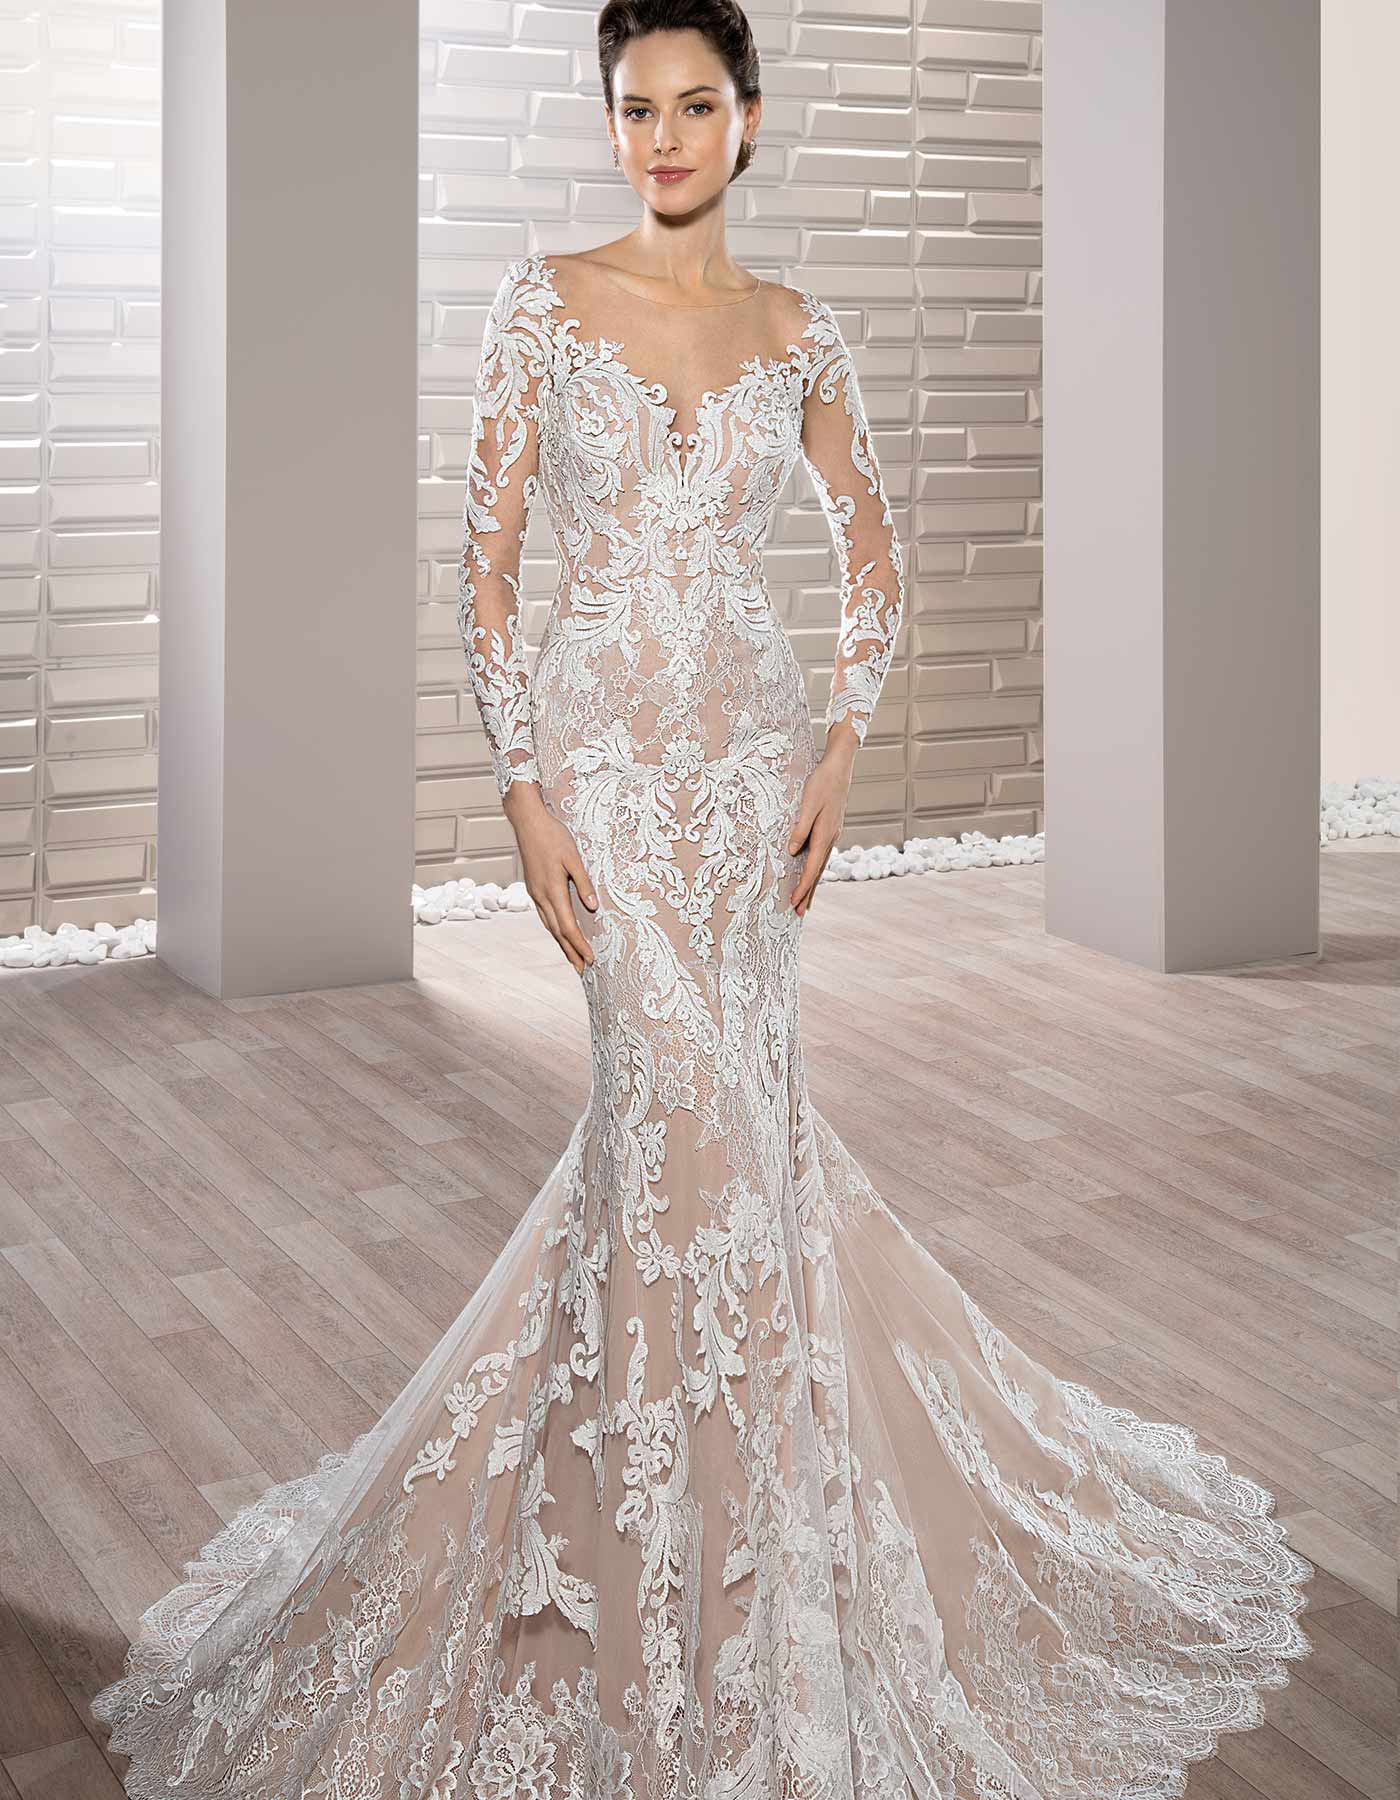 Long sleeve lace wedding dress, 717 Demetrios, Melbourne